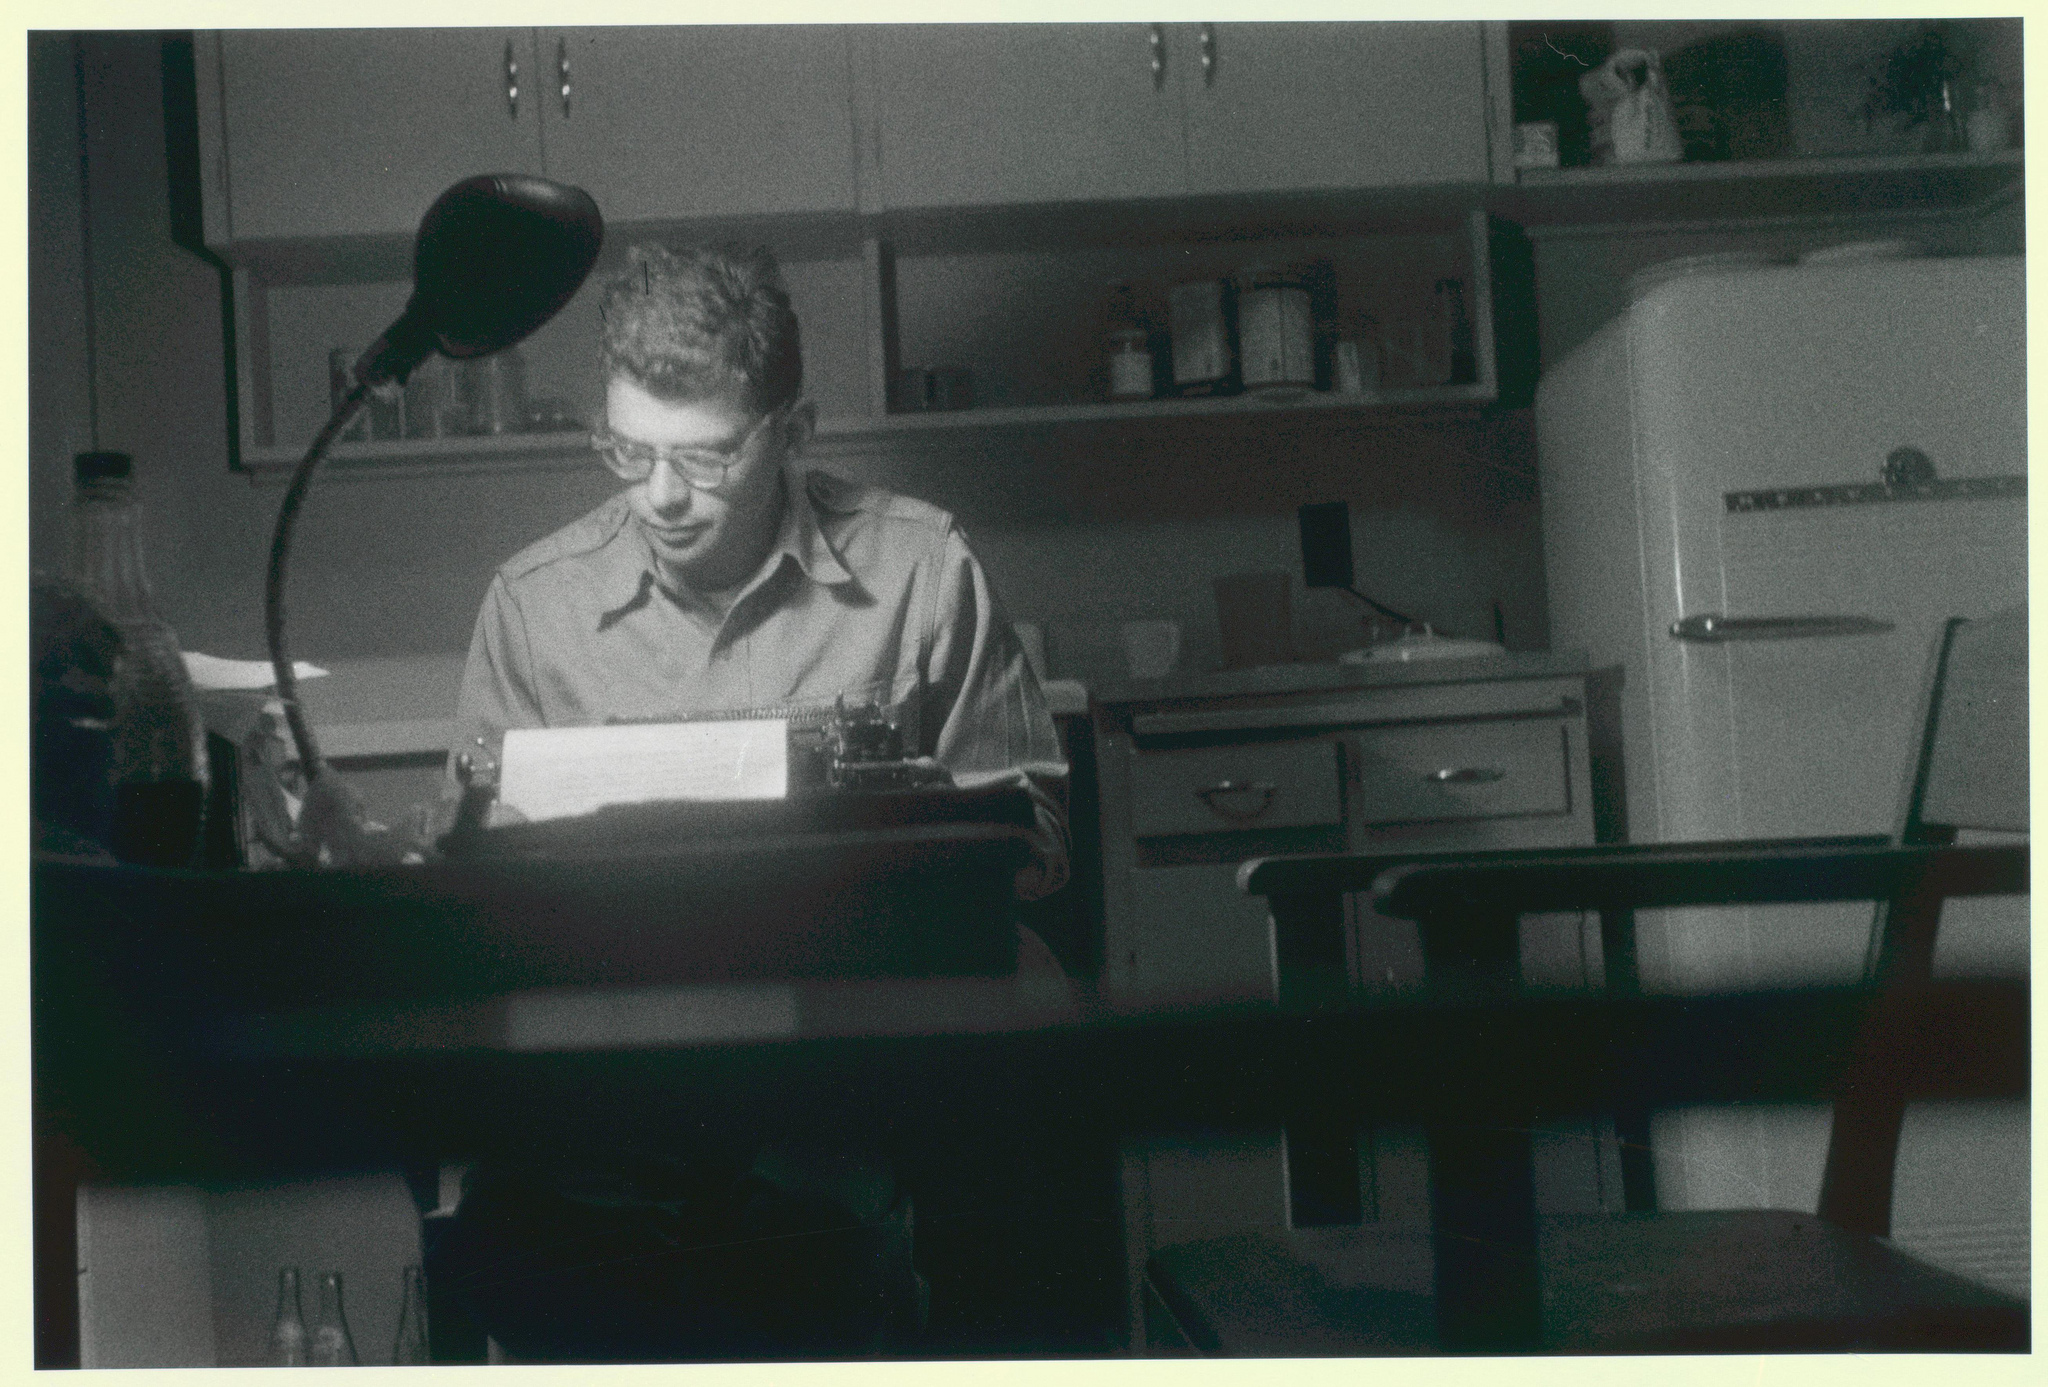 Allen Ginsberg, self portrait under desk lamp, San Francisco, 1953